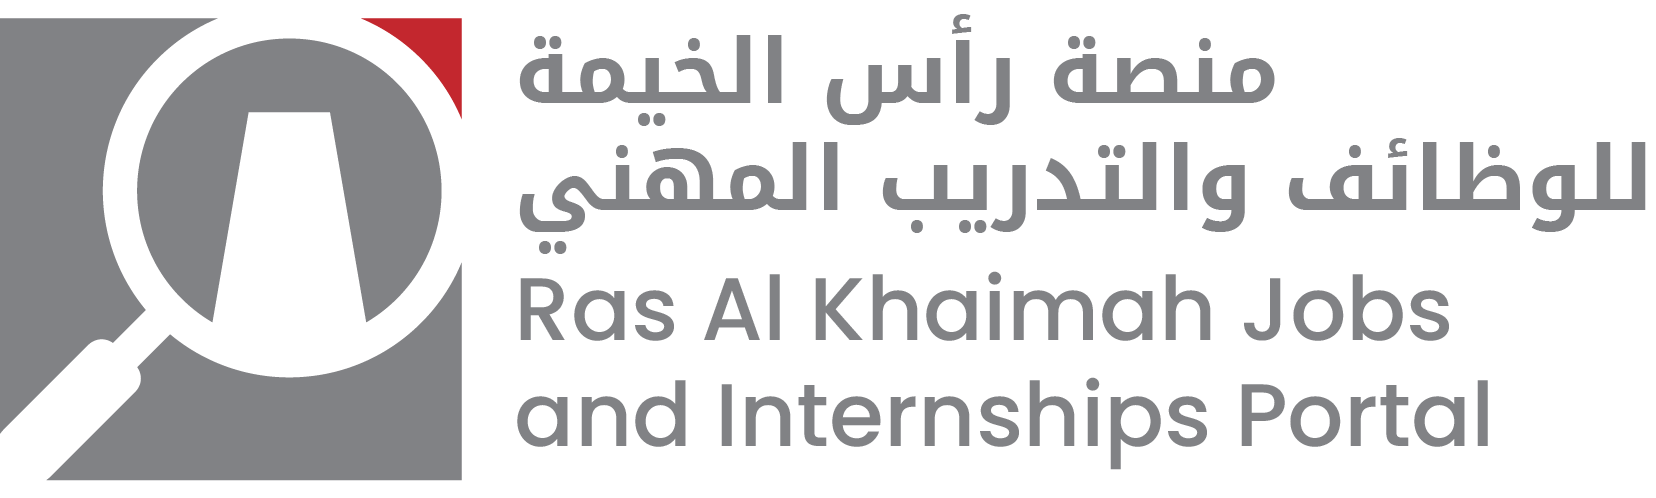 Ras Al Khaimah Jobs and Internships Portal